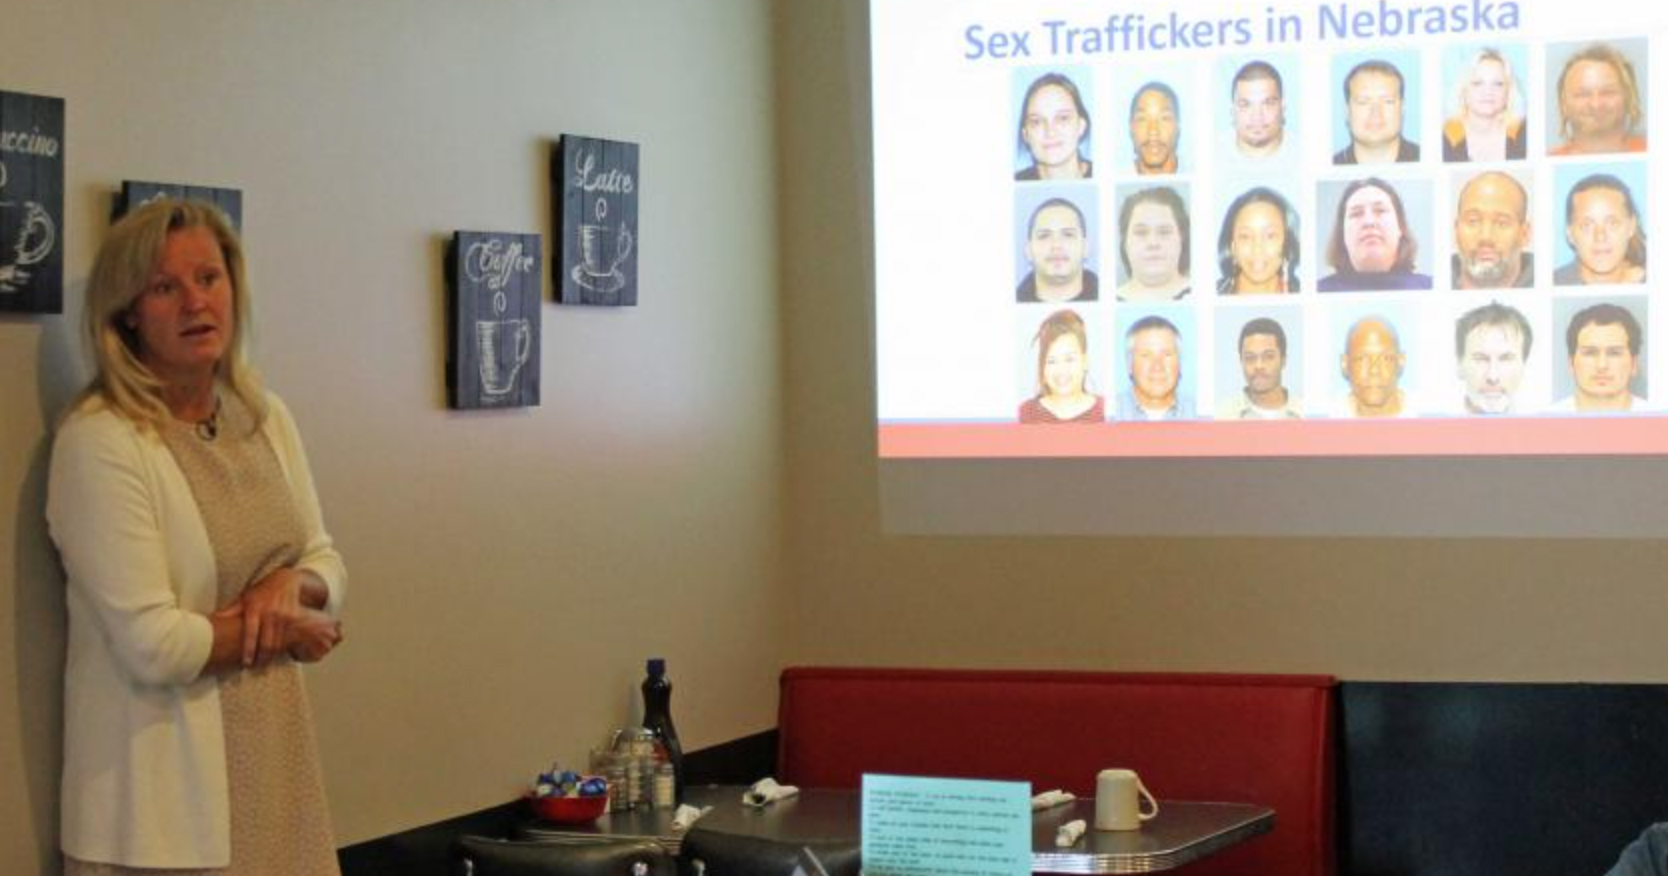 Human trafficking in Nebraska